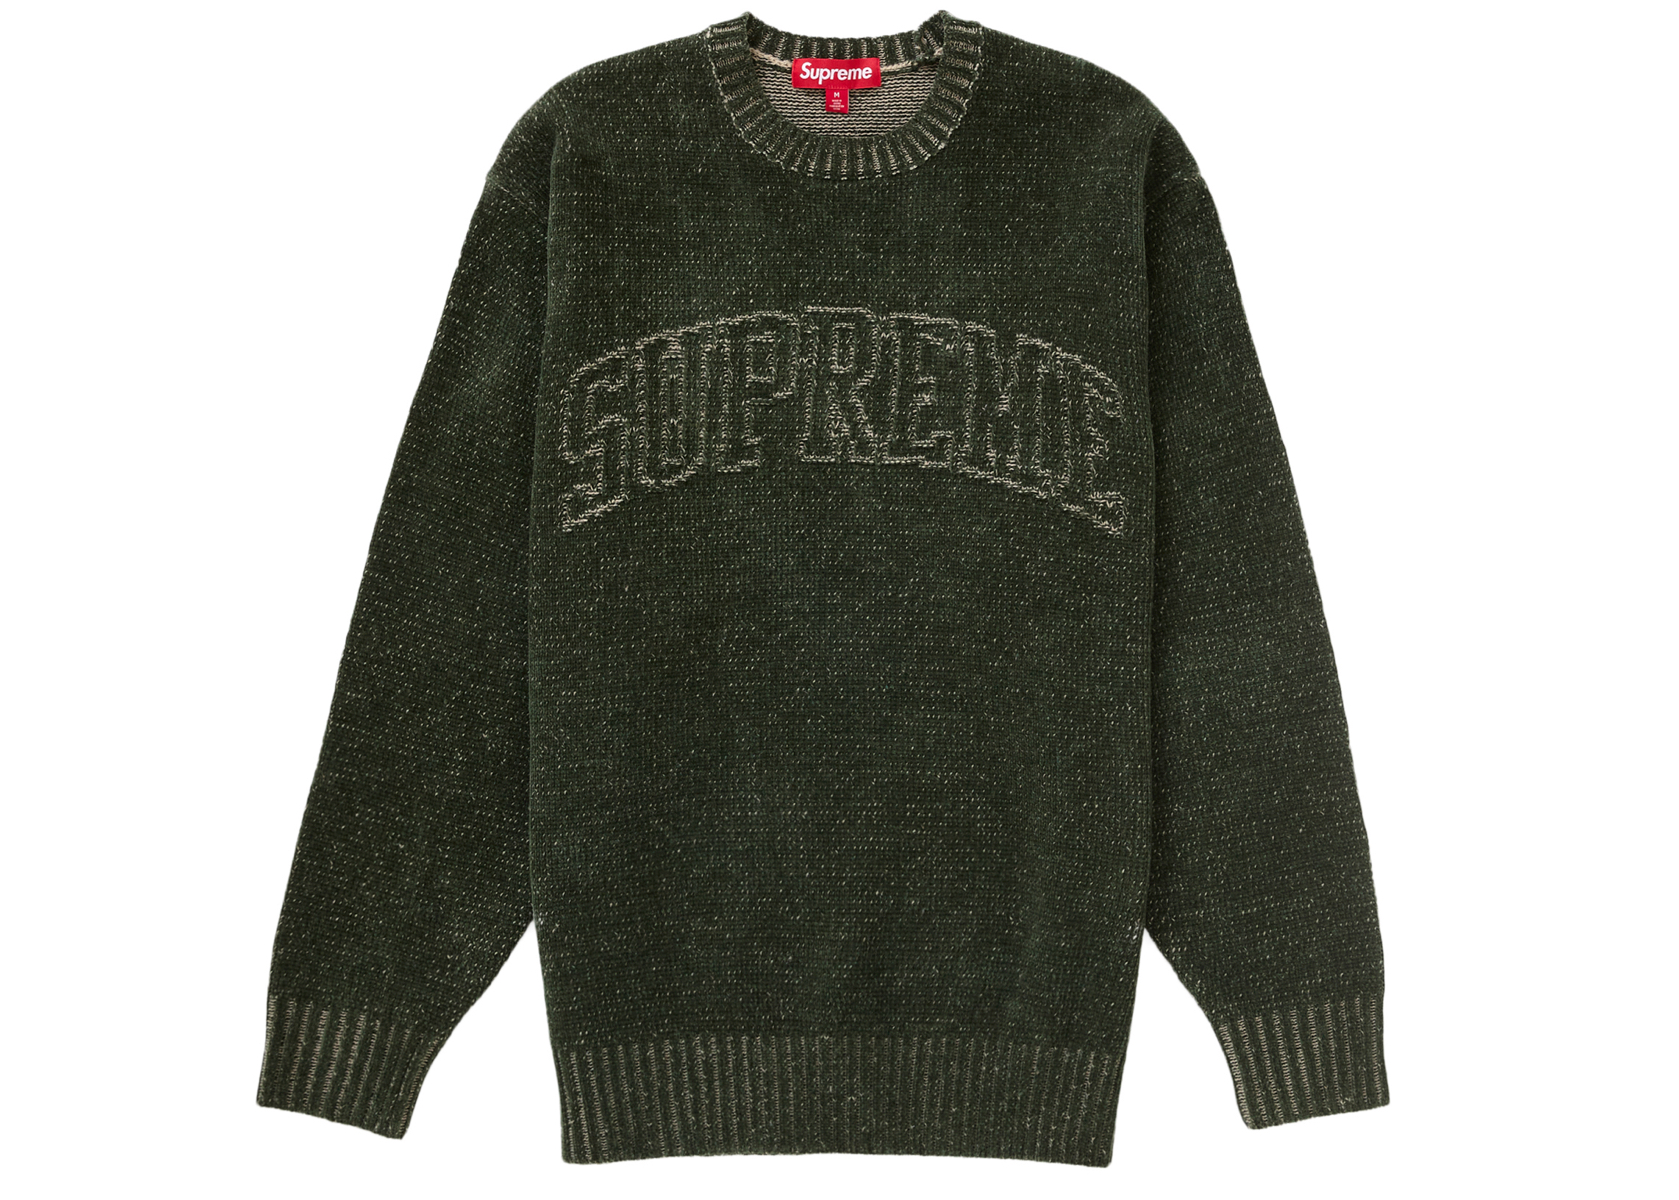 Supreme Logo Repeat Sweater Navy